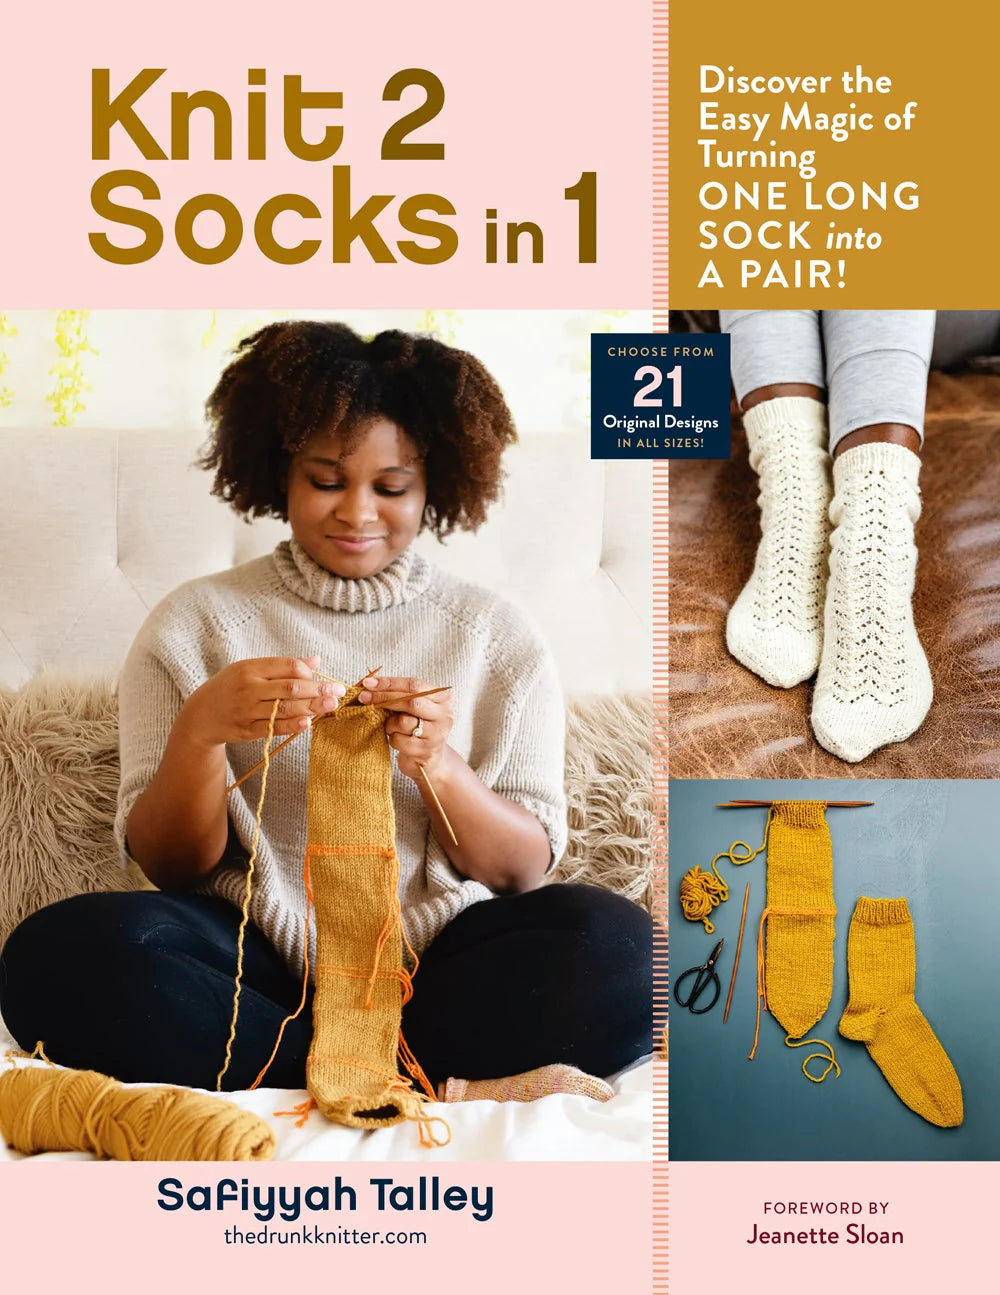 Knit 2 Socks in 1, Safiyyah Talley